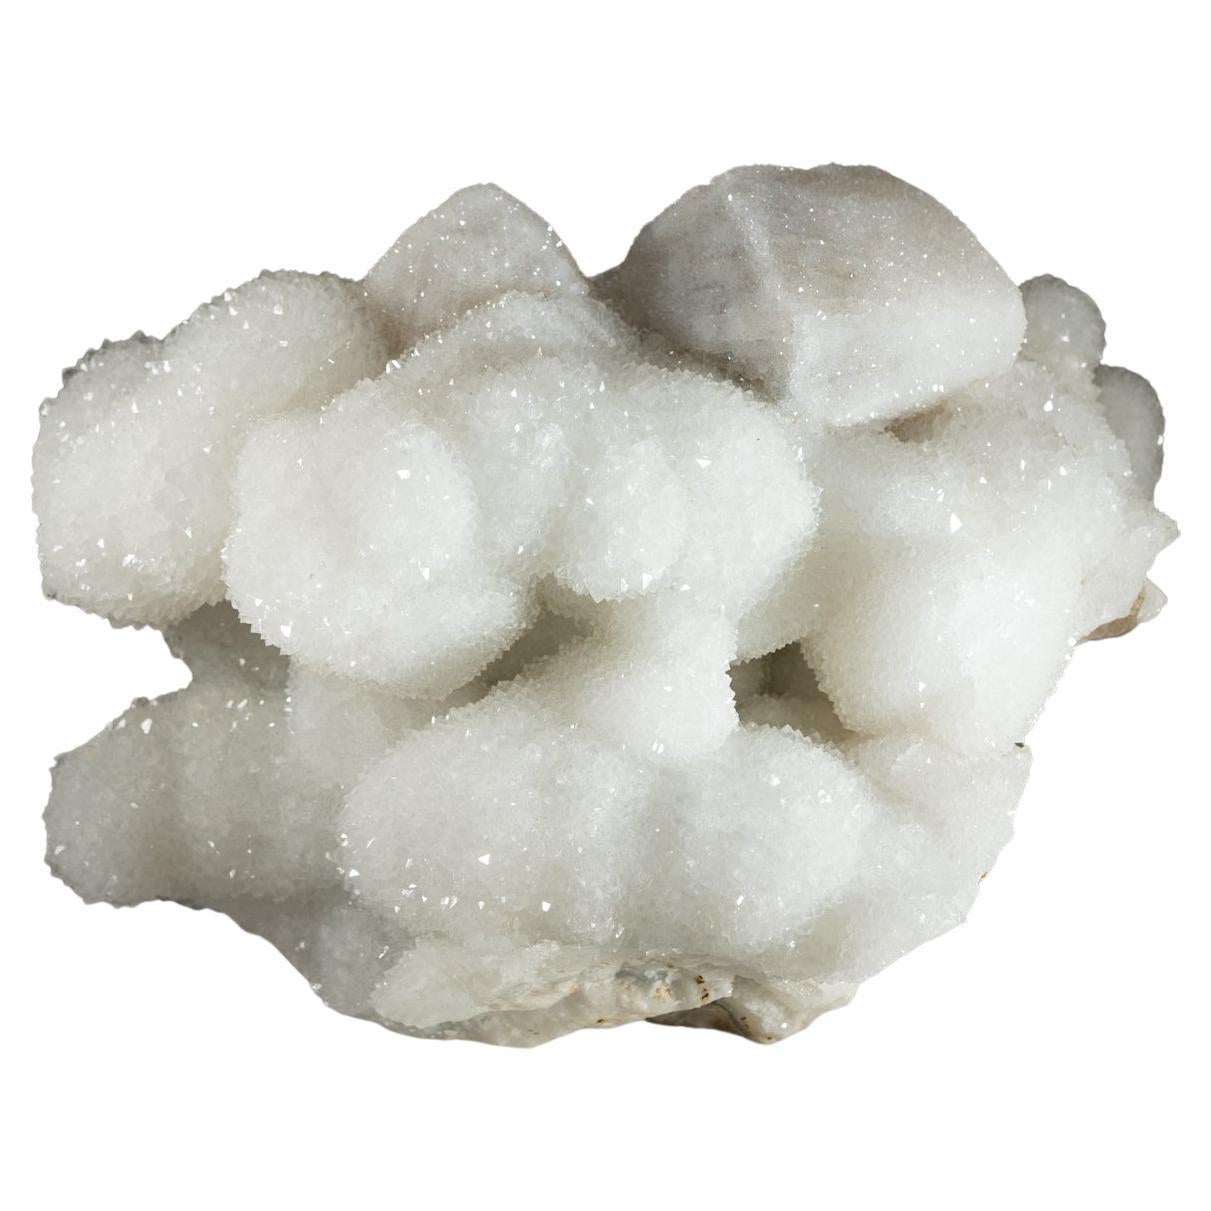 Druzy Snow Quartz Crystal Cluster from Italy